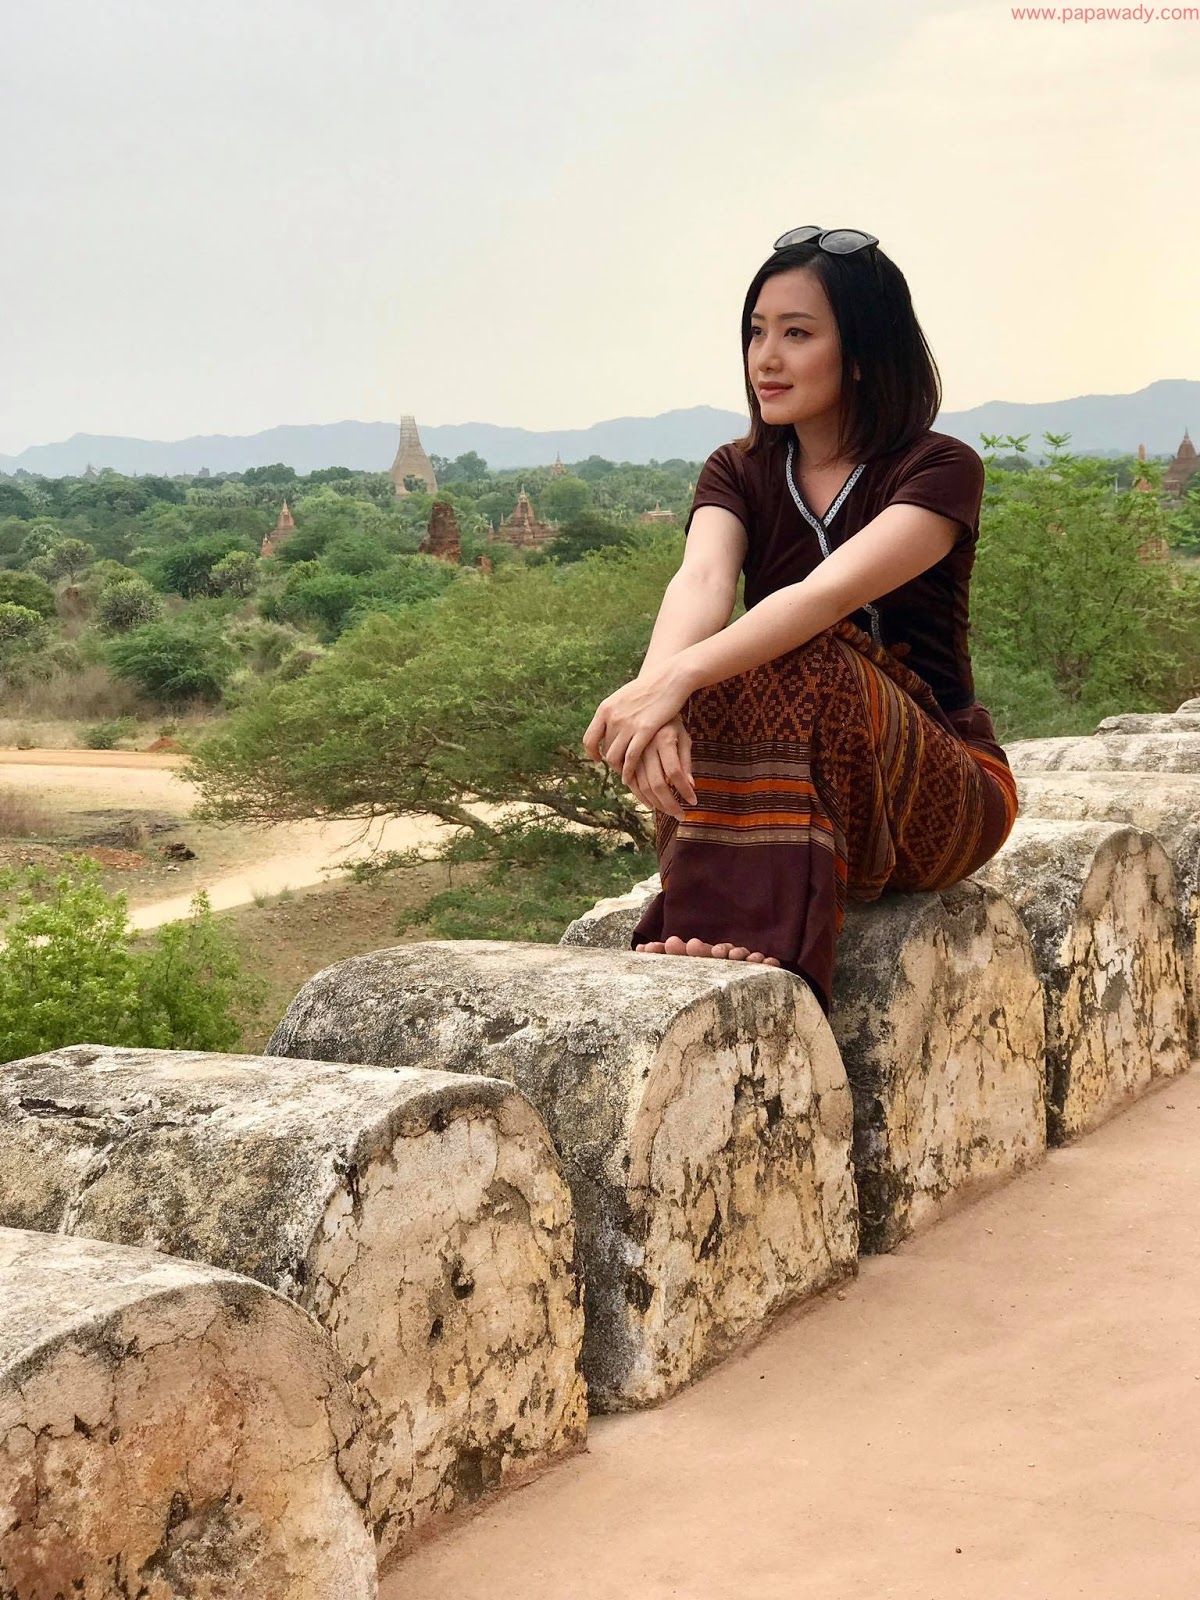 Yu Thandar Tin Beautiful Captured Photos In Ancient Bagan in Myanmar